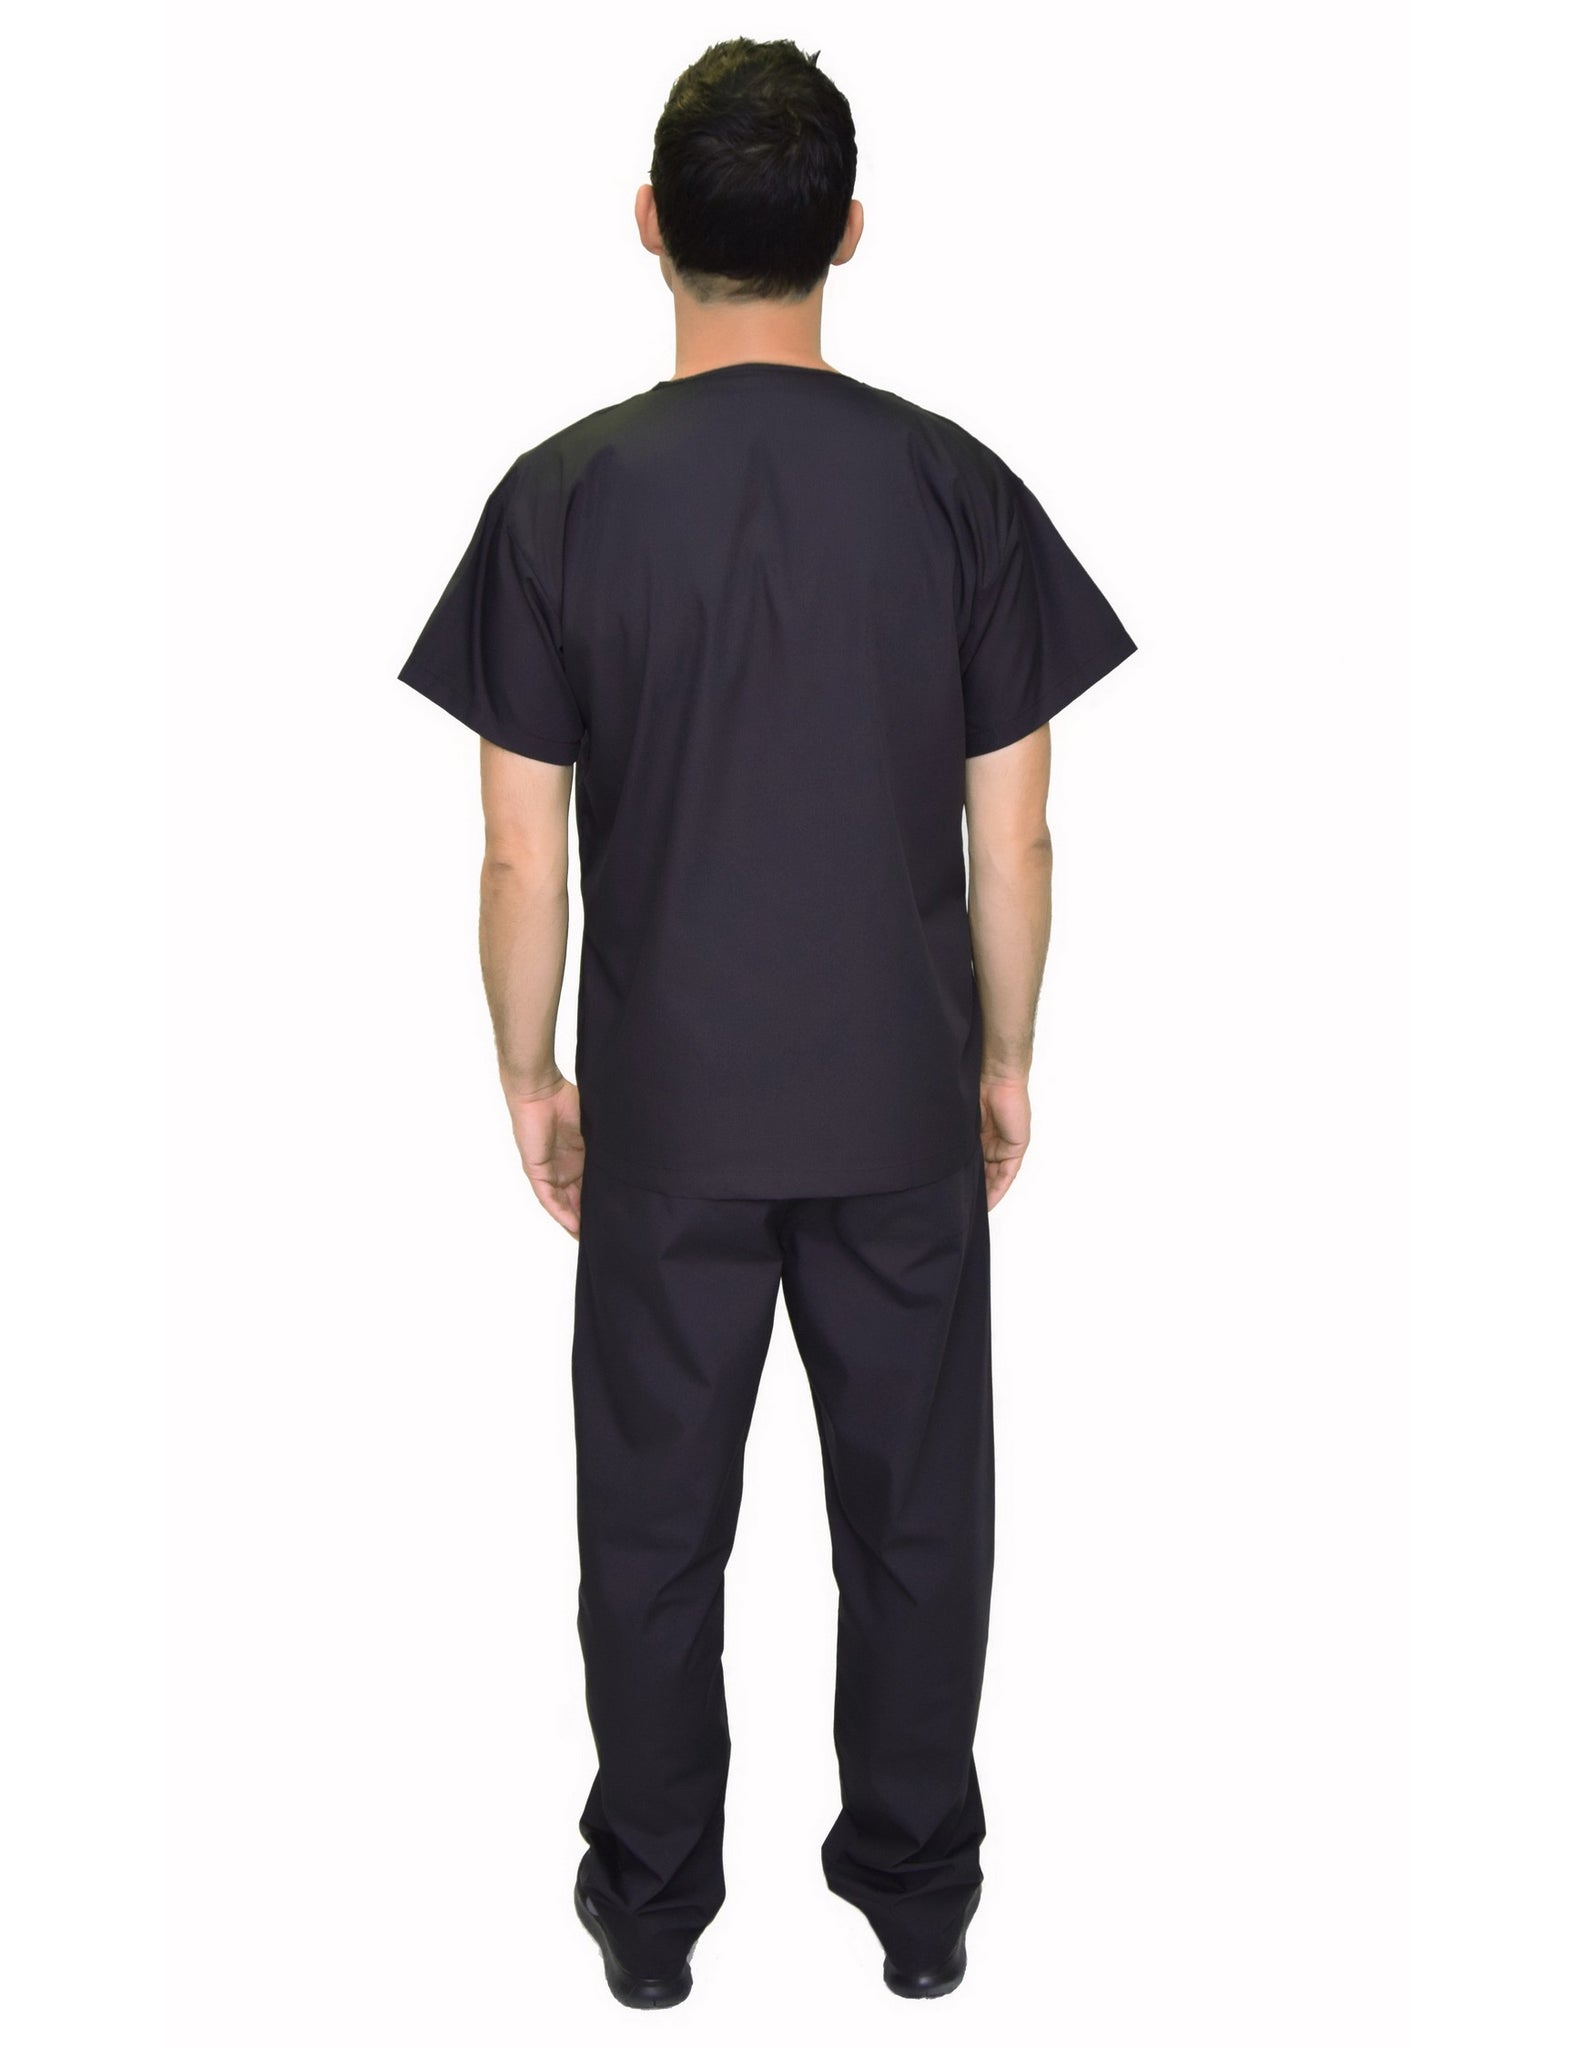 Lizzy-B Men Medical Scrub Set – The Uniform Superstore